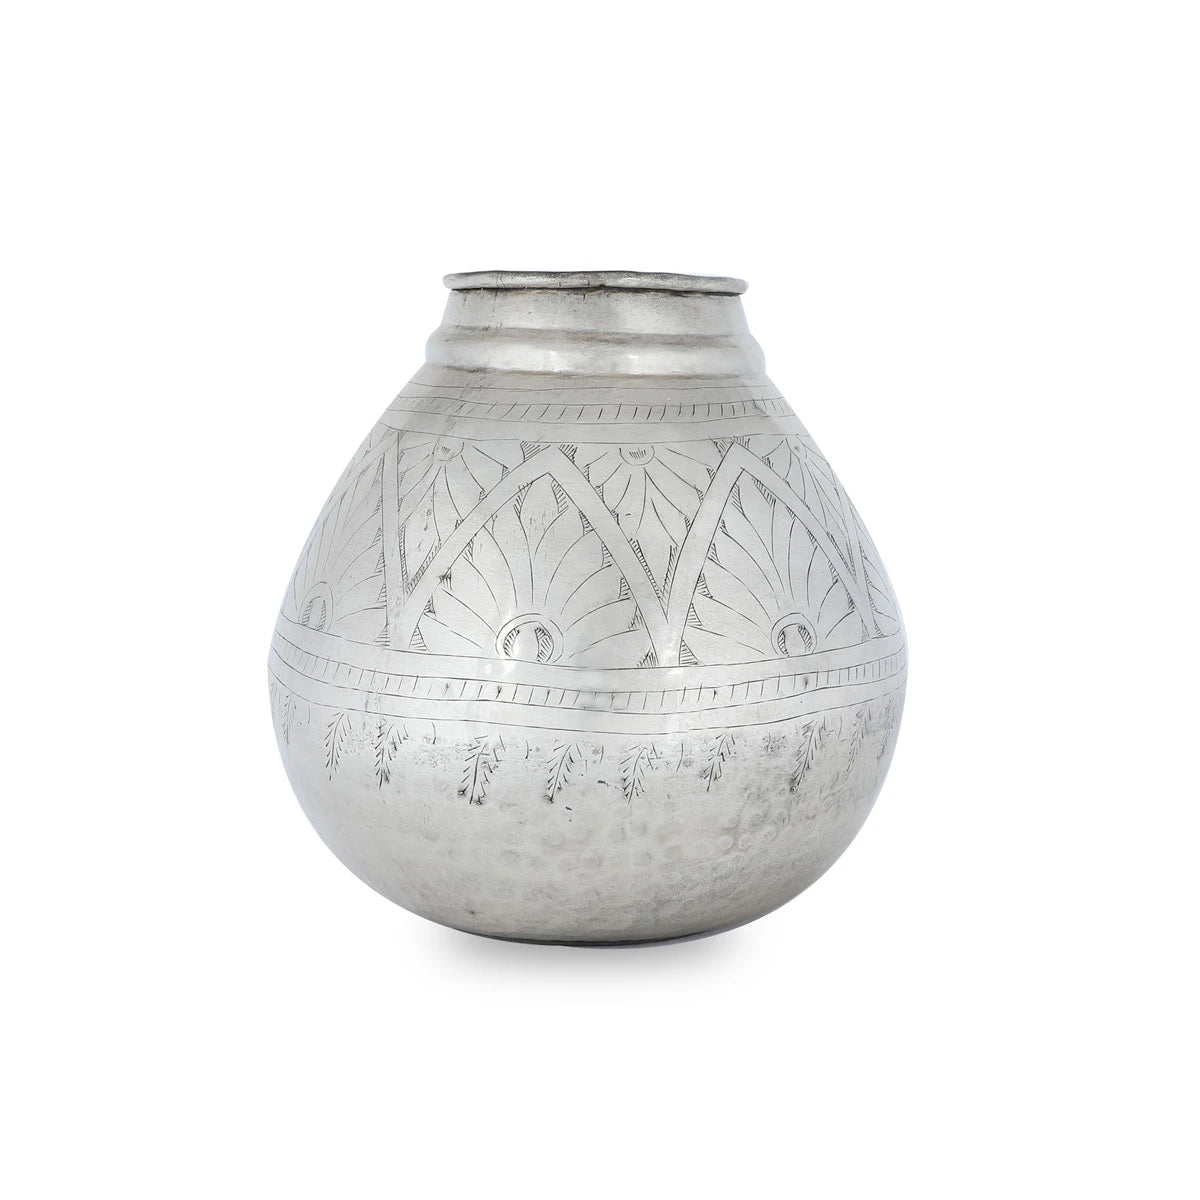 Antique Brass Planter Jar / Pot Handmade with Primitive Floral Engravings & Hammered Texture